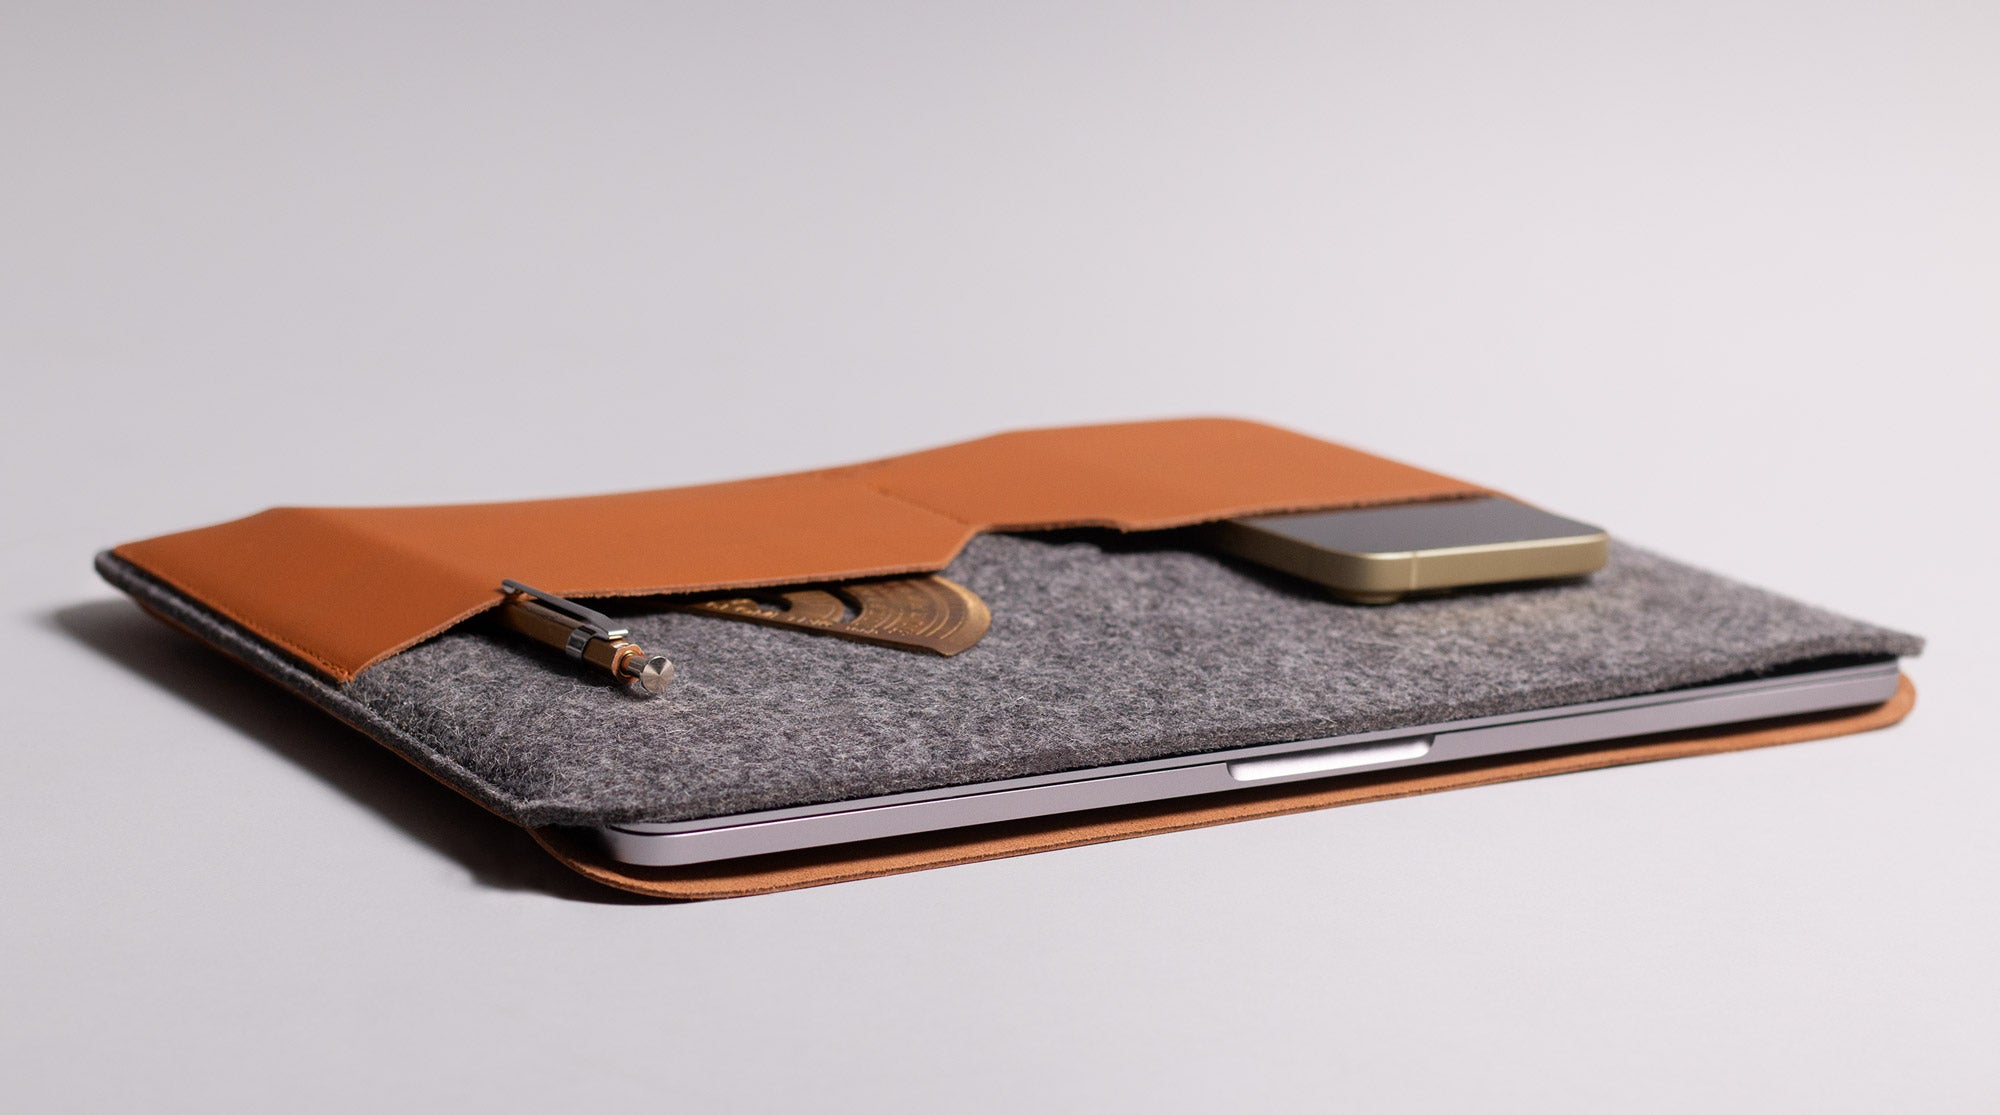 Slim leather and felt MacBook Sleeve case